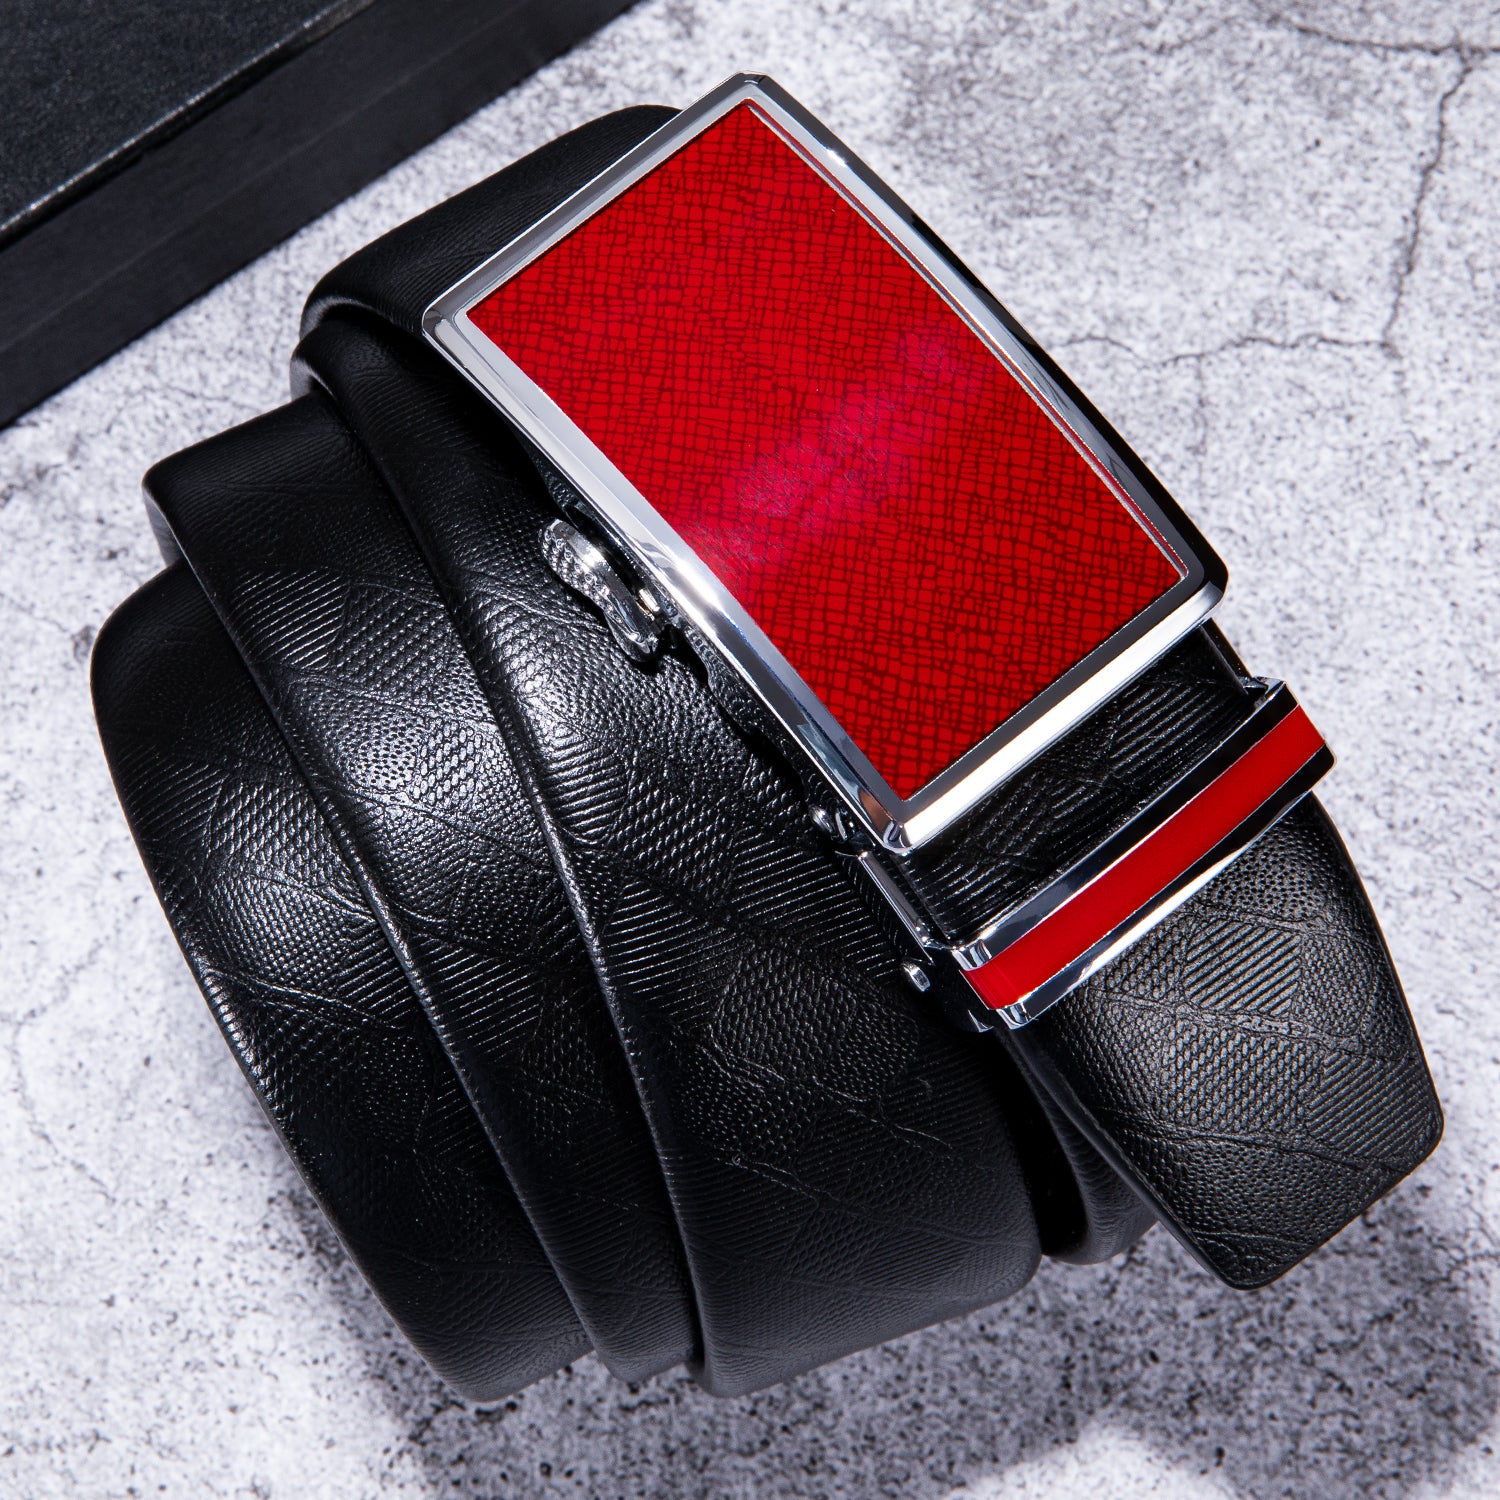 Luxury Red Plaid Metal Buckle Genuine Leather Belt 110cm-160cm, 120cm/47inch